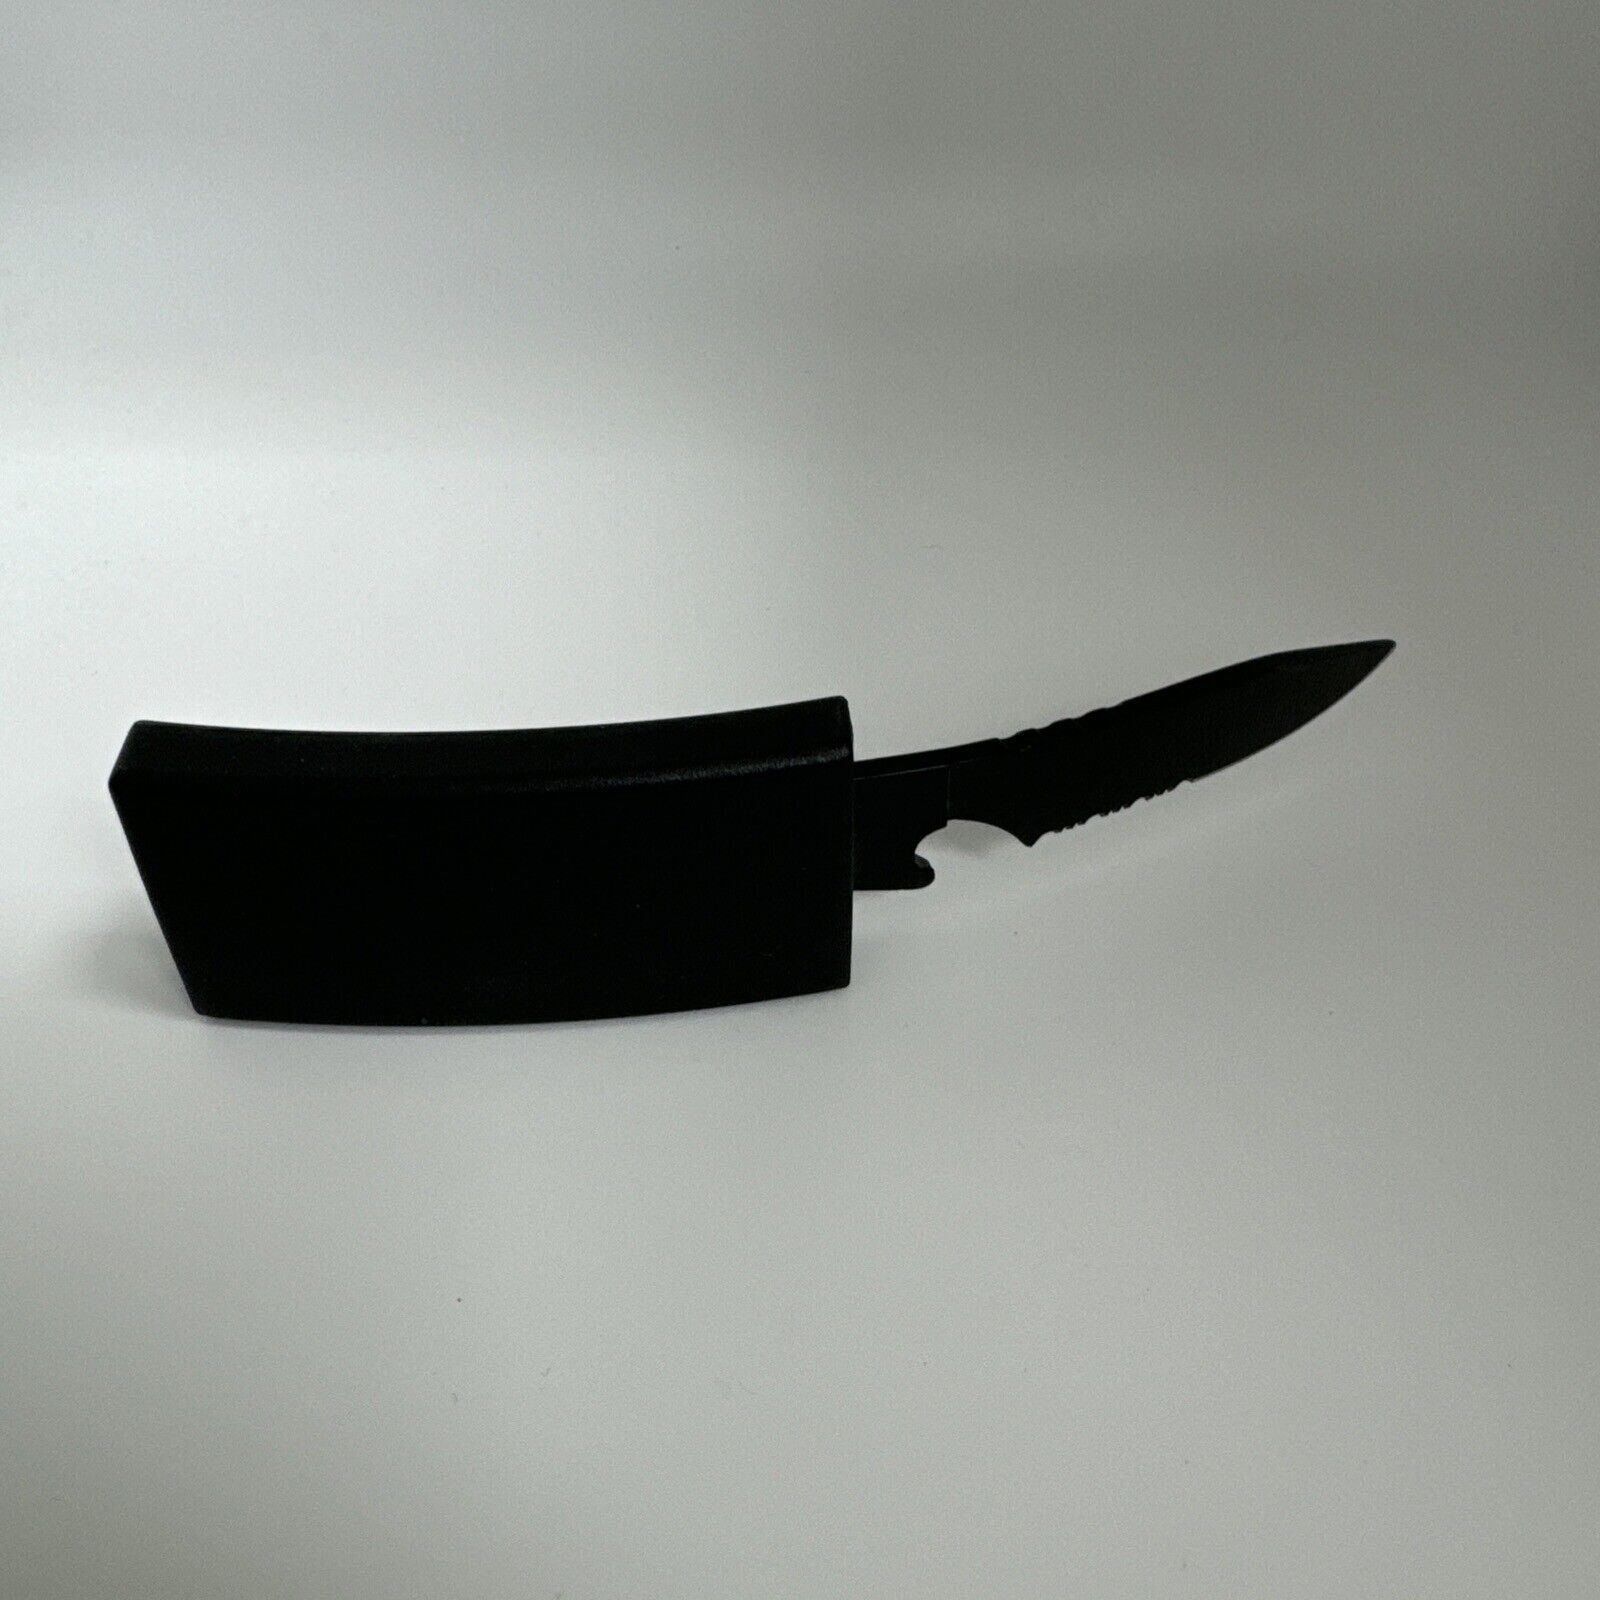 NEW Concealed Black Belt Knife |Quick Access|Serrated 4inc Blade| Bottle Opener.